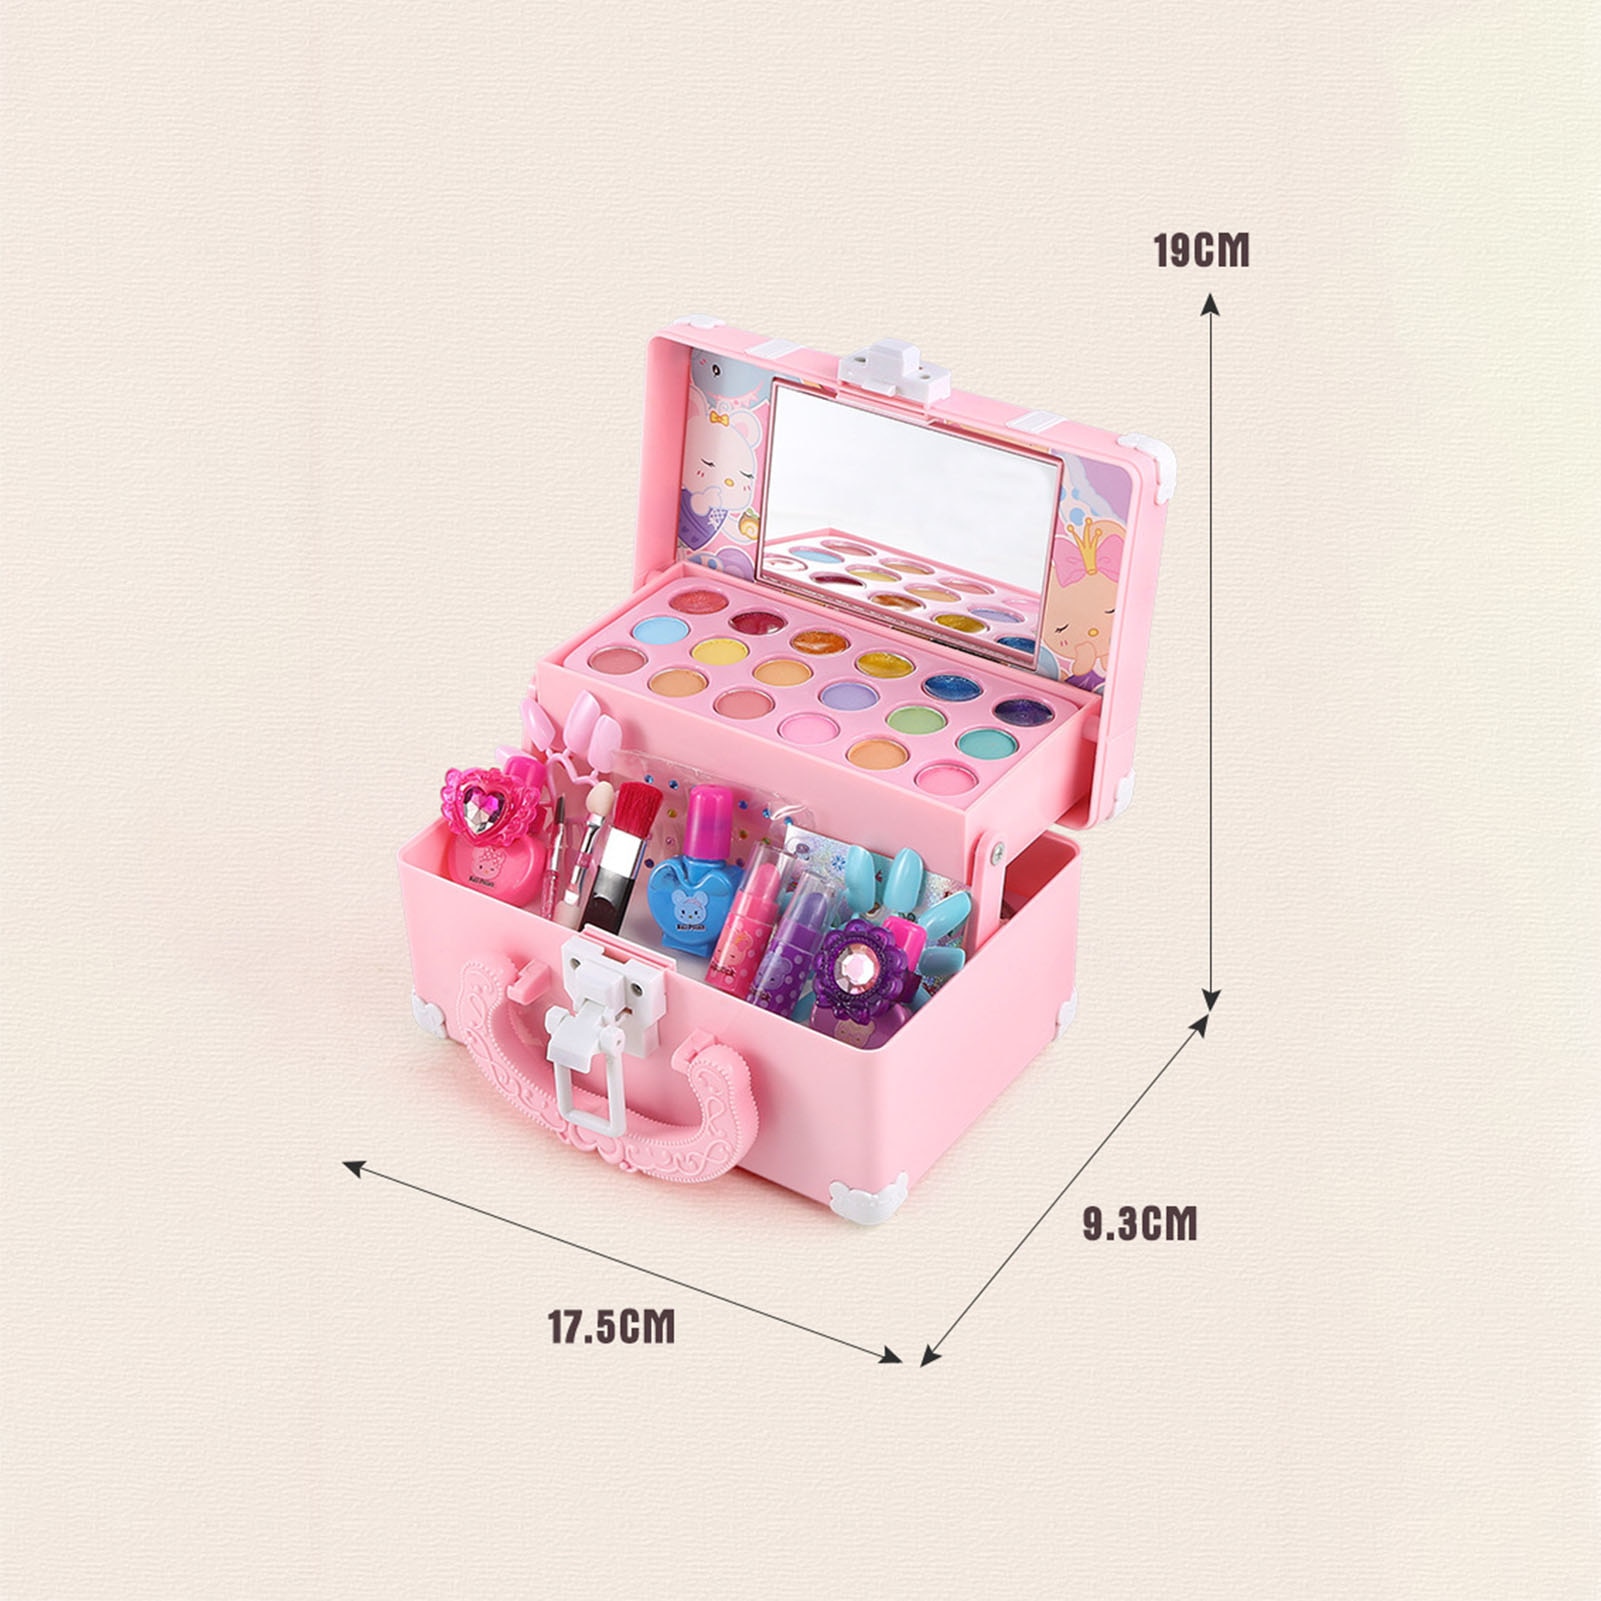 Children-Makeup-Set-Lipstick-Makeup-Pretend-Play-With-Toys-Cosmetic-Educational-Toys-Girl-Princess-Makeup-Toy-4